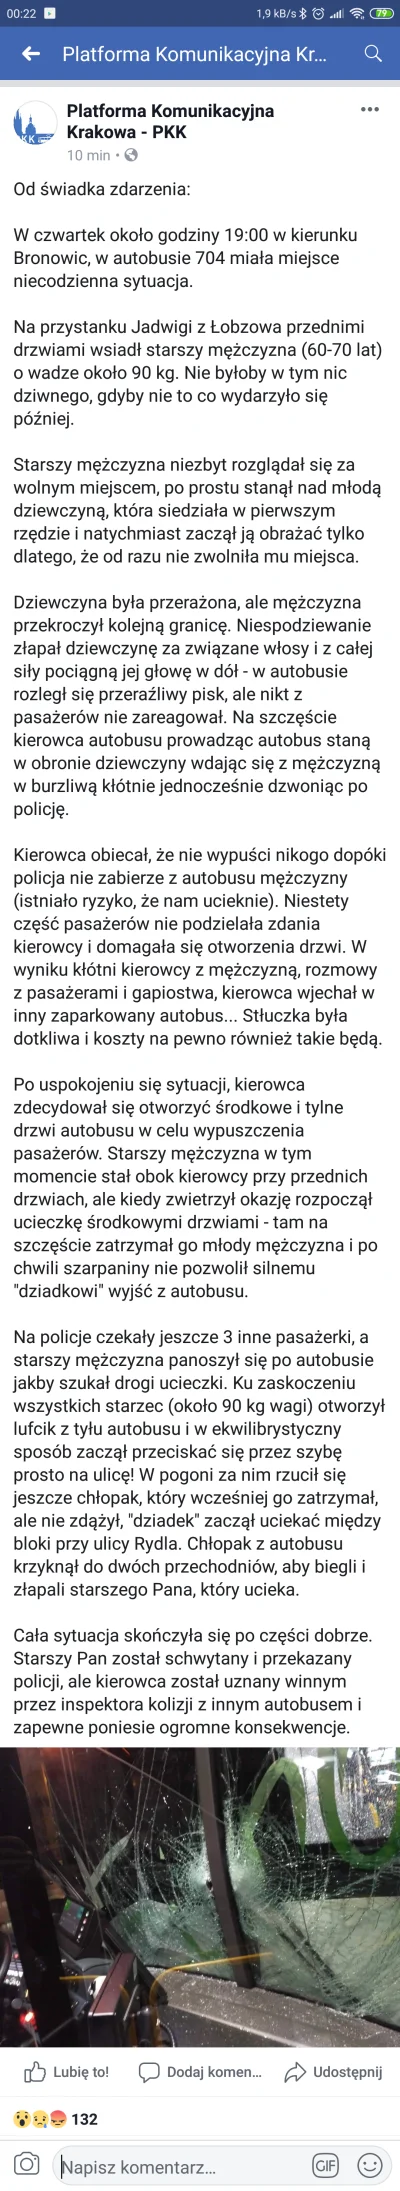 psposki - (╯°□°）╯︵ ┻━┻
Link
#krakow